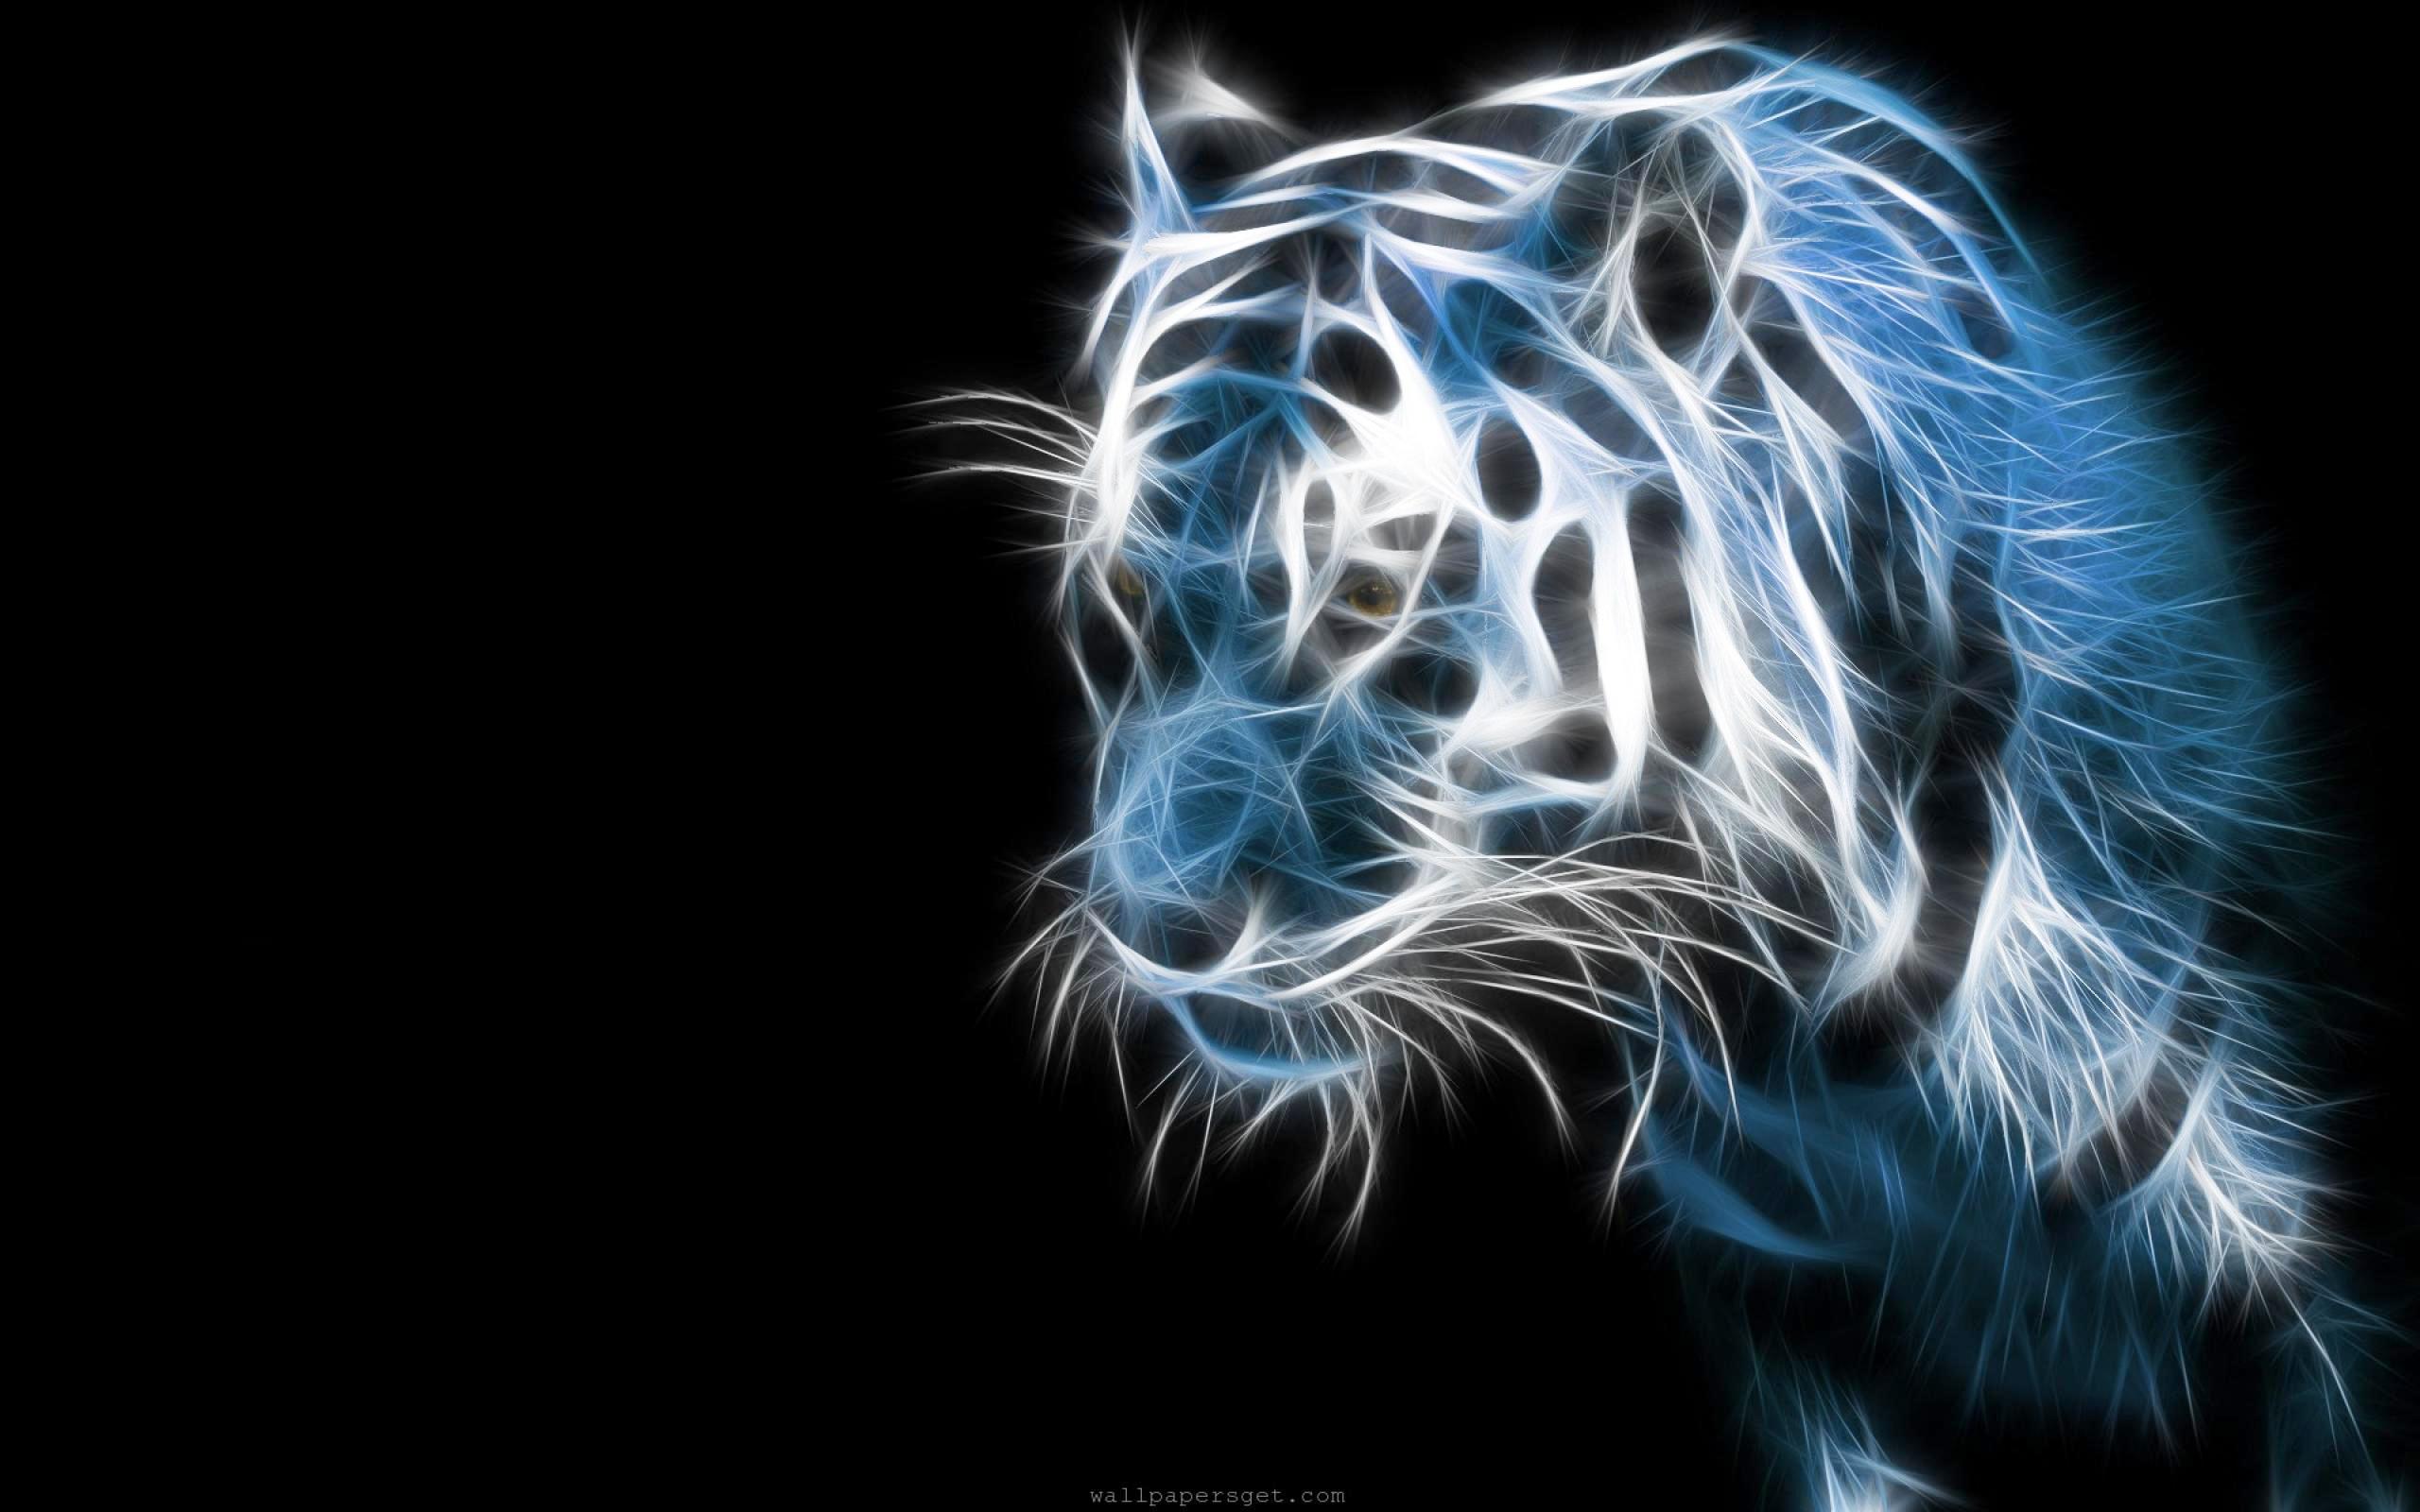 tiger-wallpapers-for-desktop-free-download.jpg